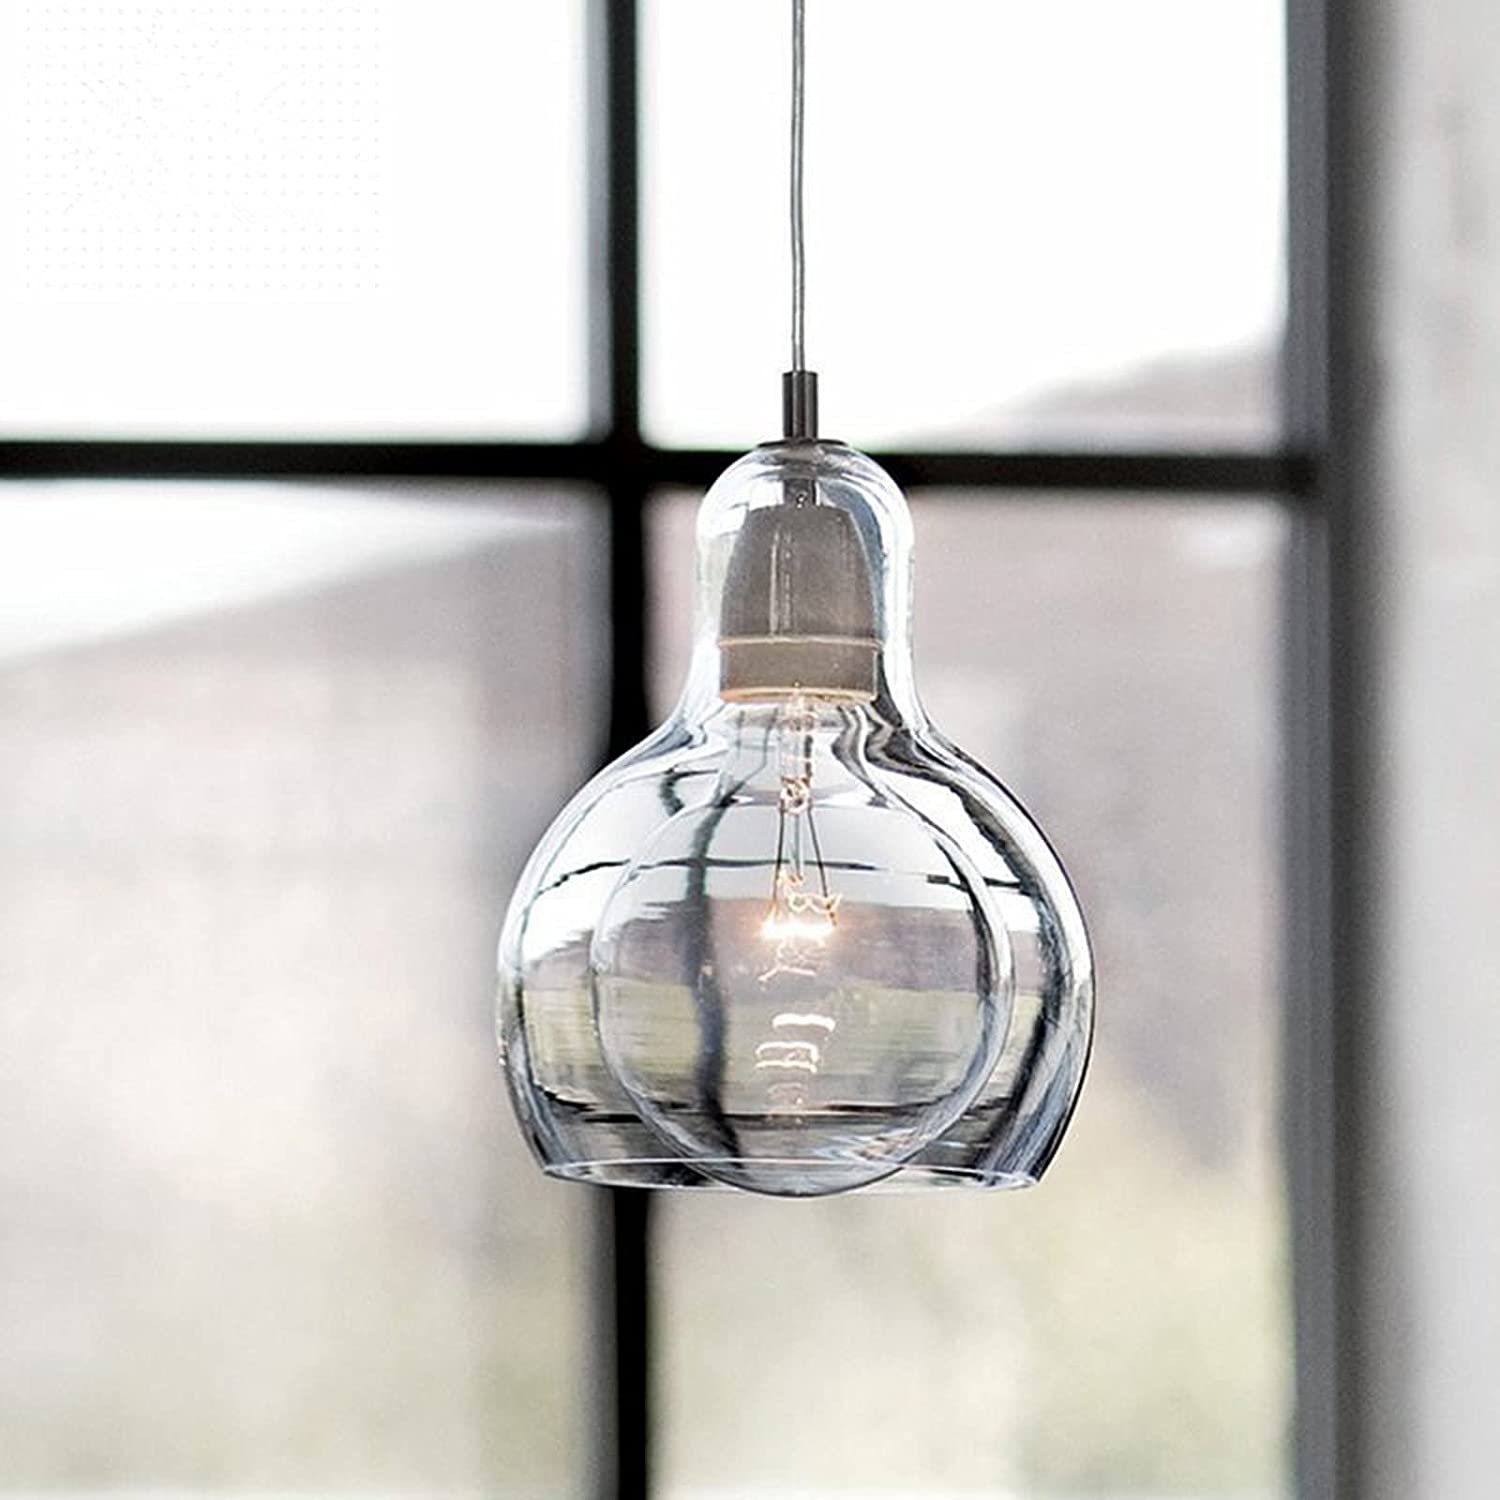 Vintage pendant chandelier ceiling light globe glass hanging light fixture